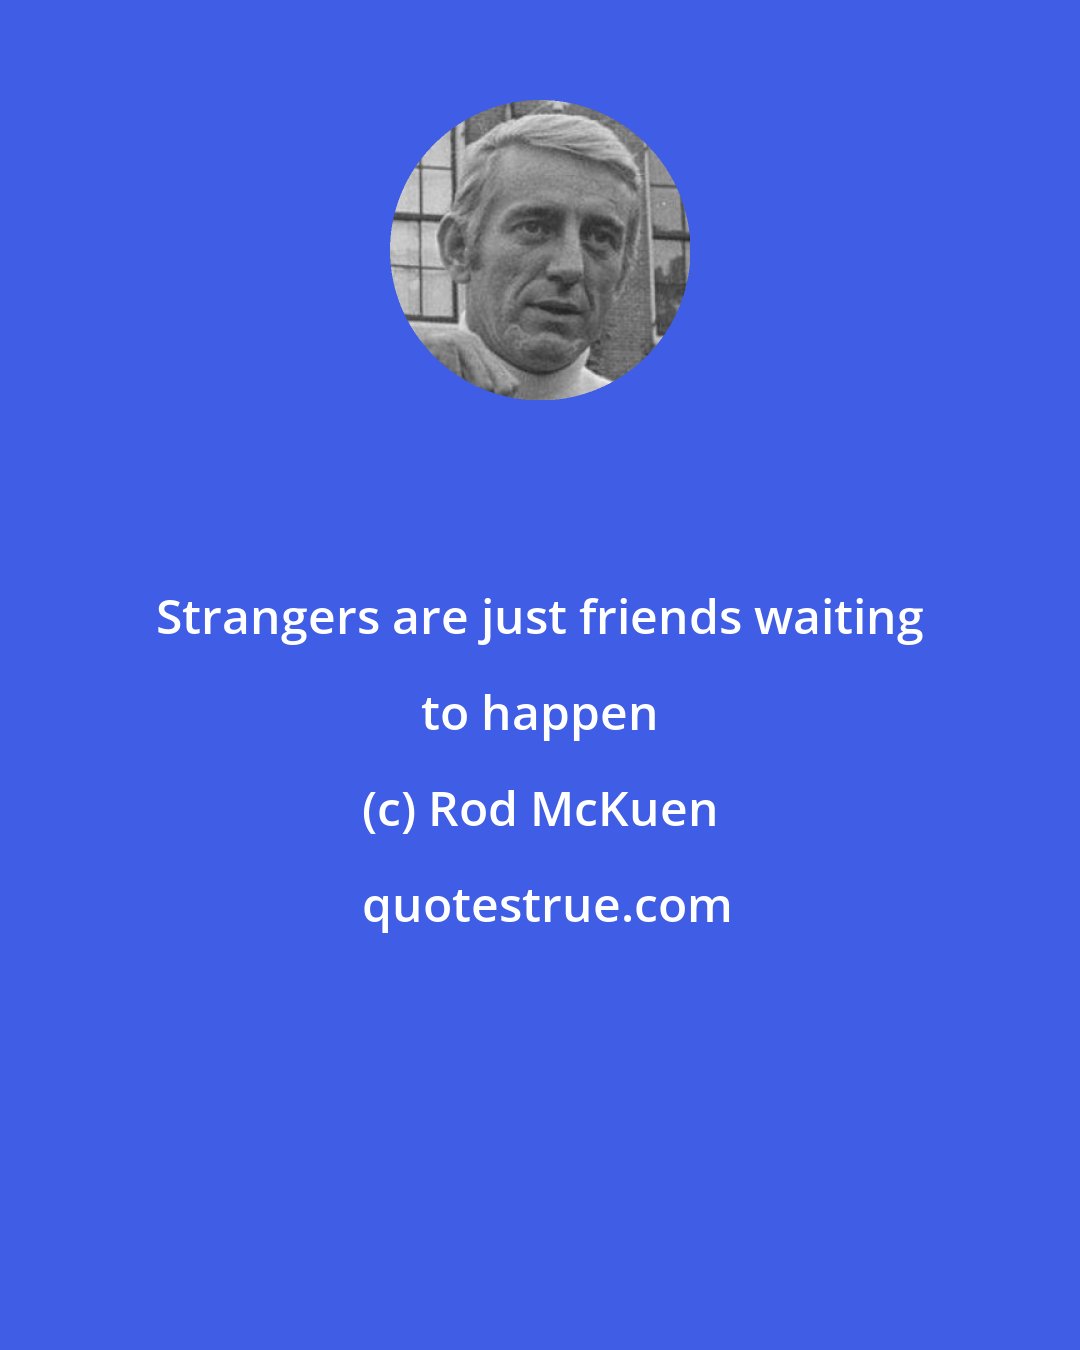 Rod McKuen: Strangers are just friends waiting to happen